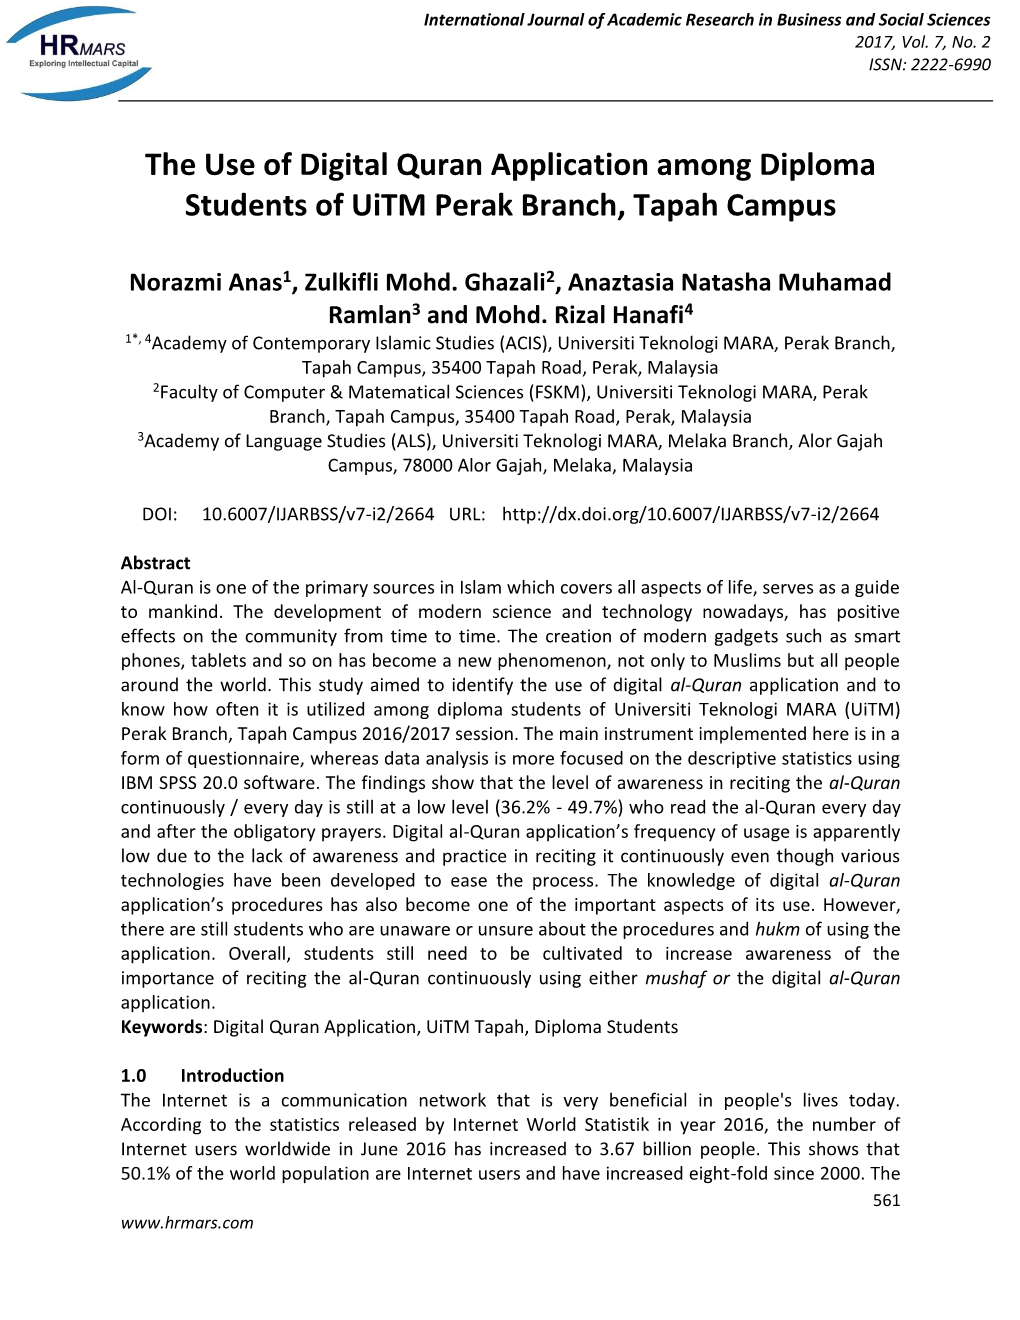 The Use of Digital Quran Application Among Diploma Students of Uitm Perak Branch, Tapah Campus